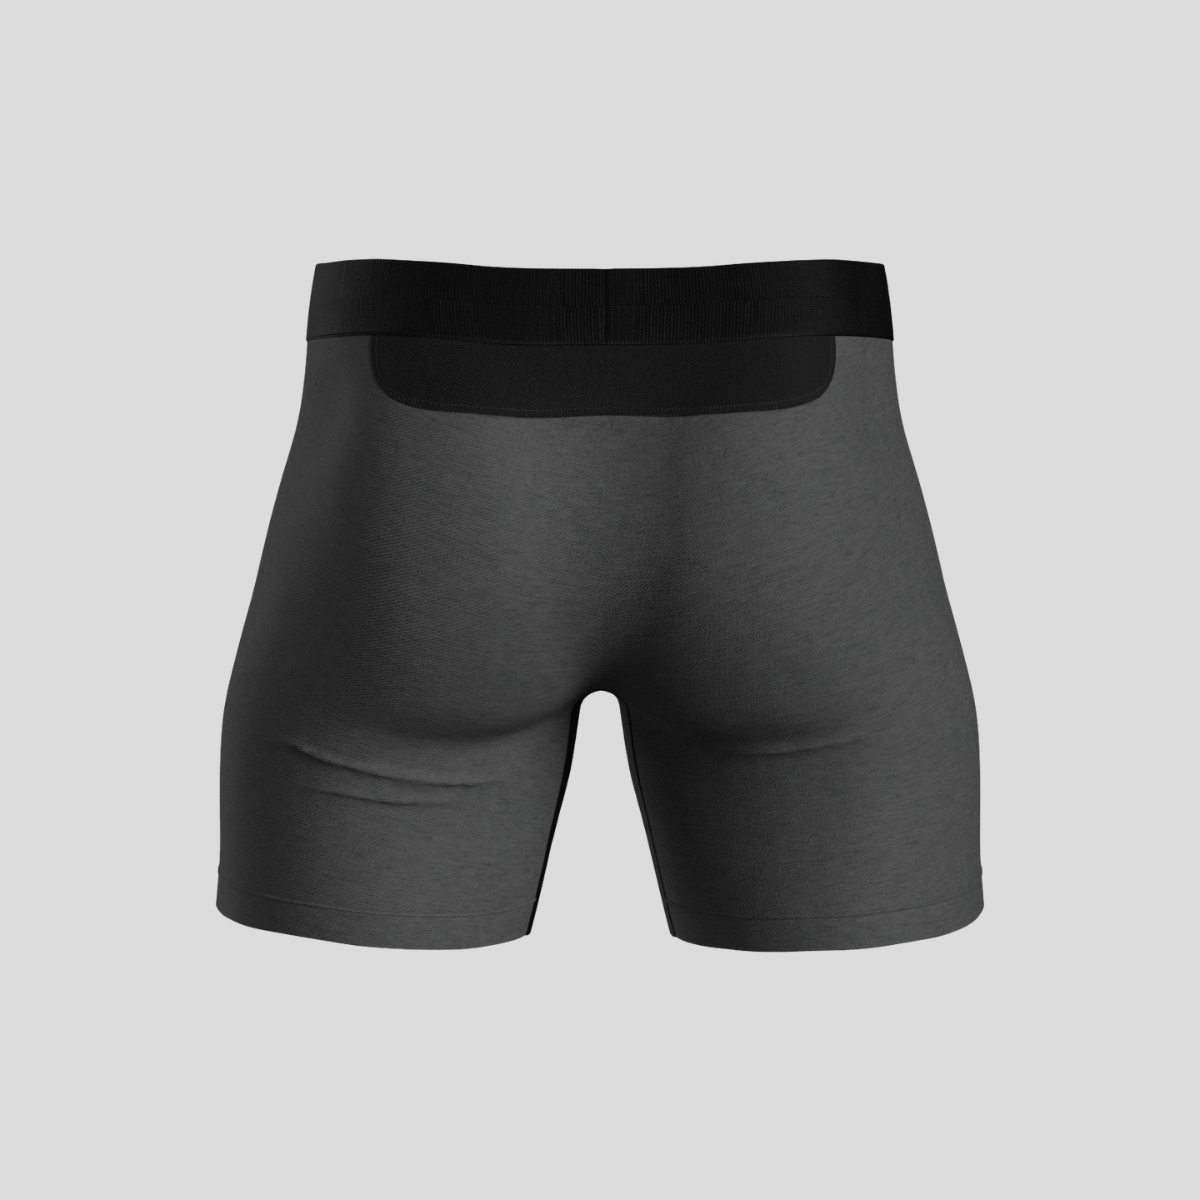 Grey Bamboo Boxer Brief Underwear for Men